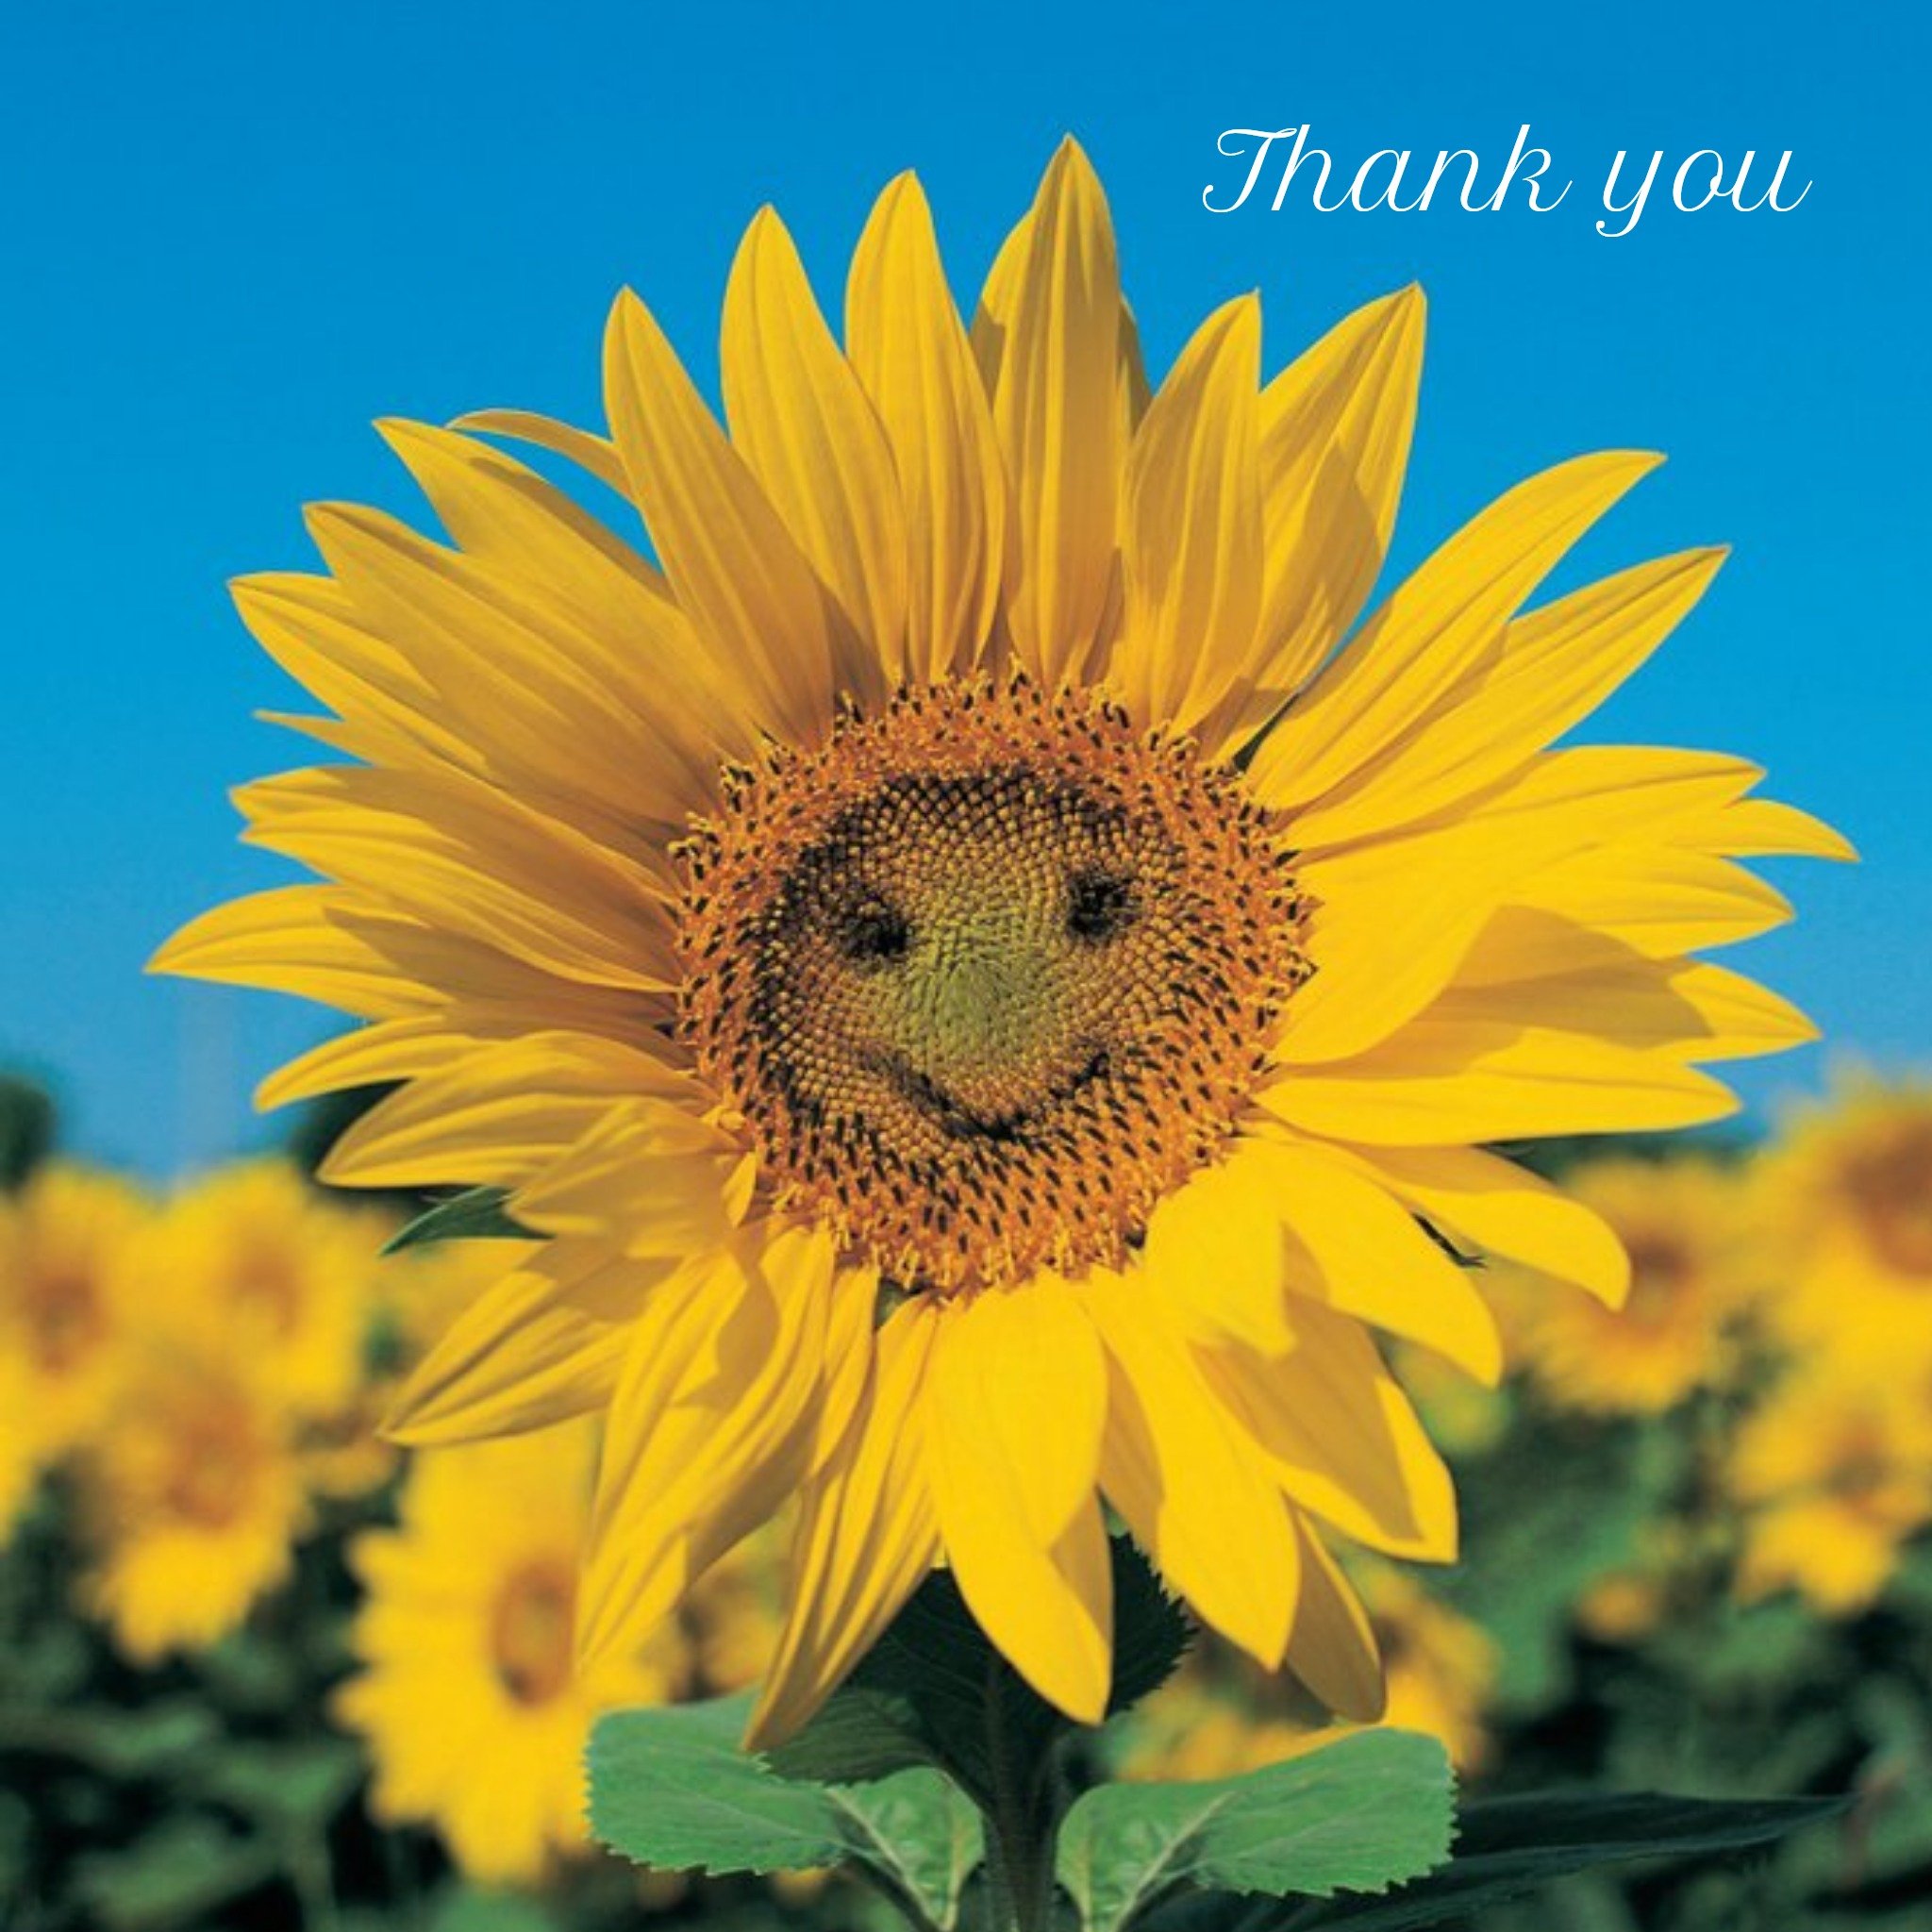 Moonpig Smiling Sunflower Personalised Thank You Card, Large